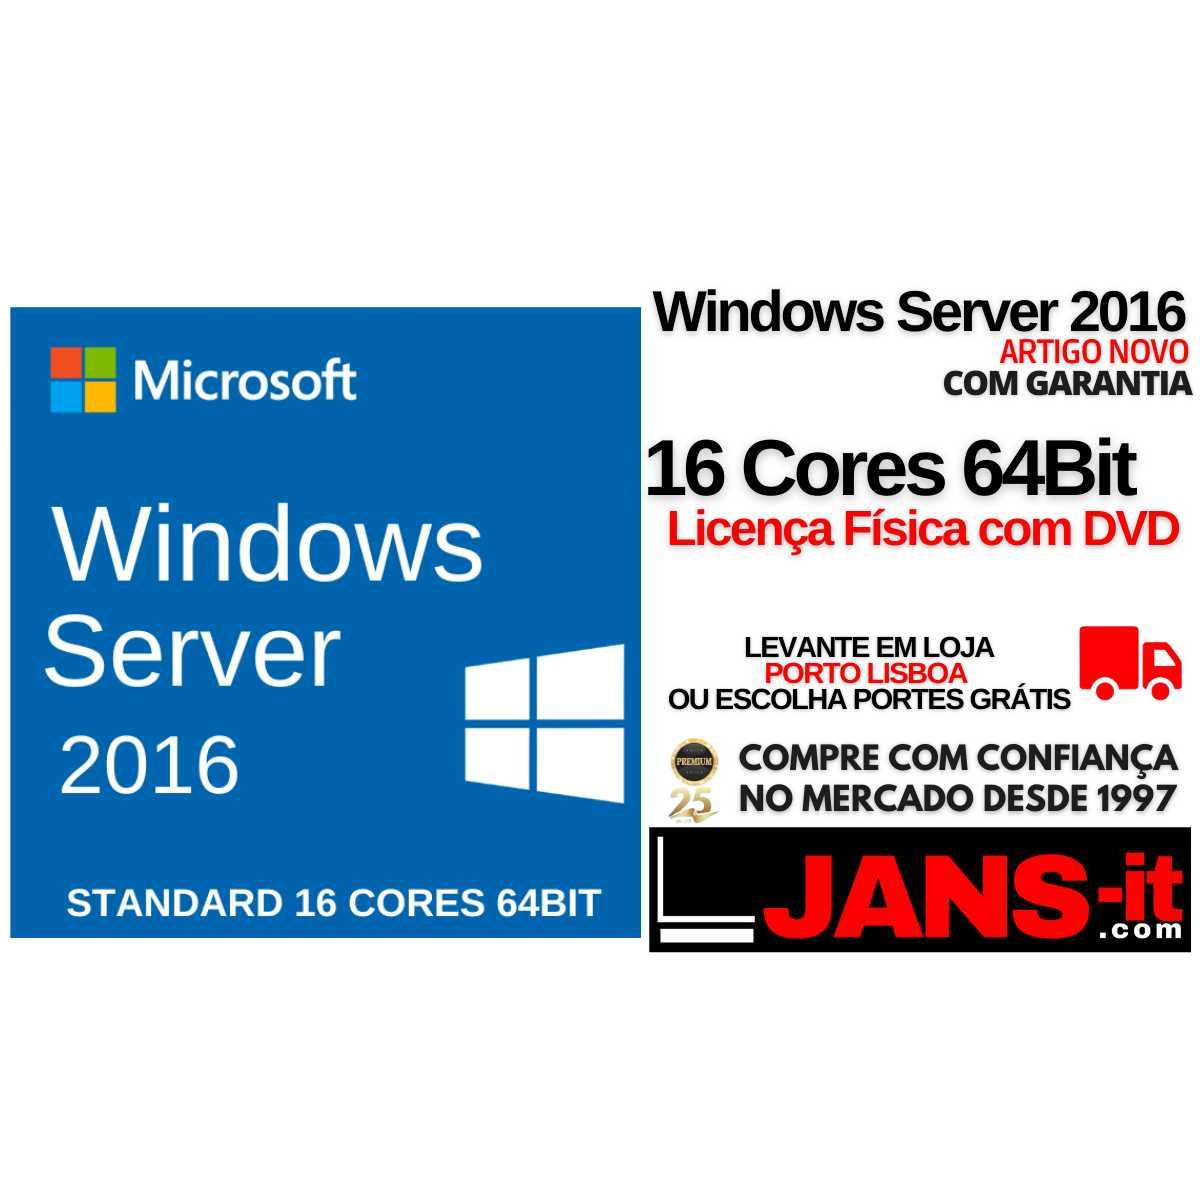 Microsoft Windows Server 2016 Standard 16 Cores 64Bit - NOVO